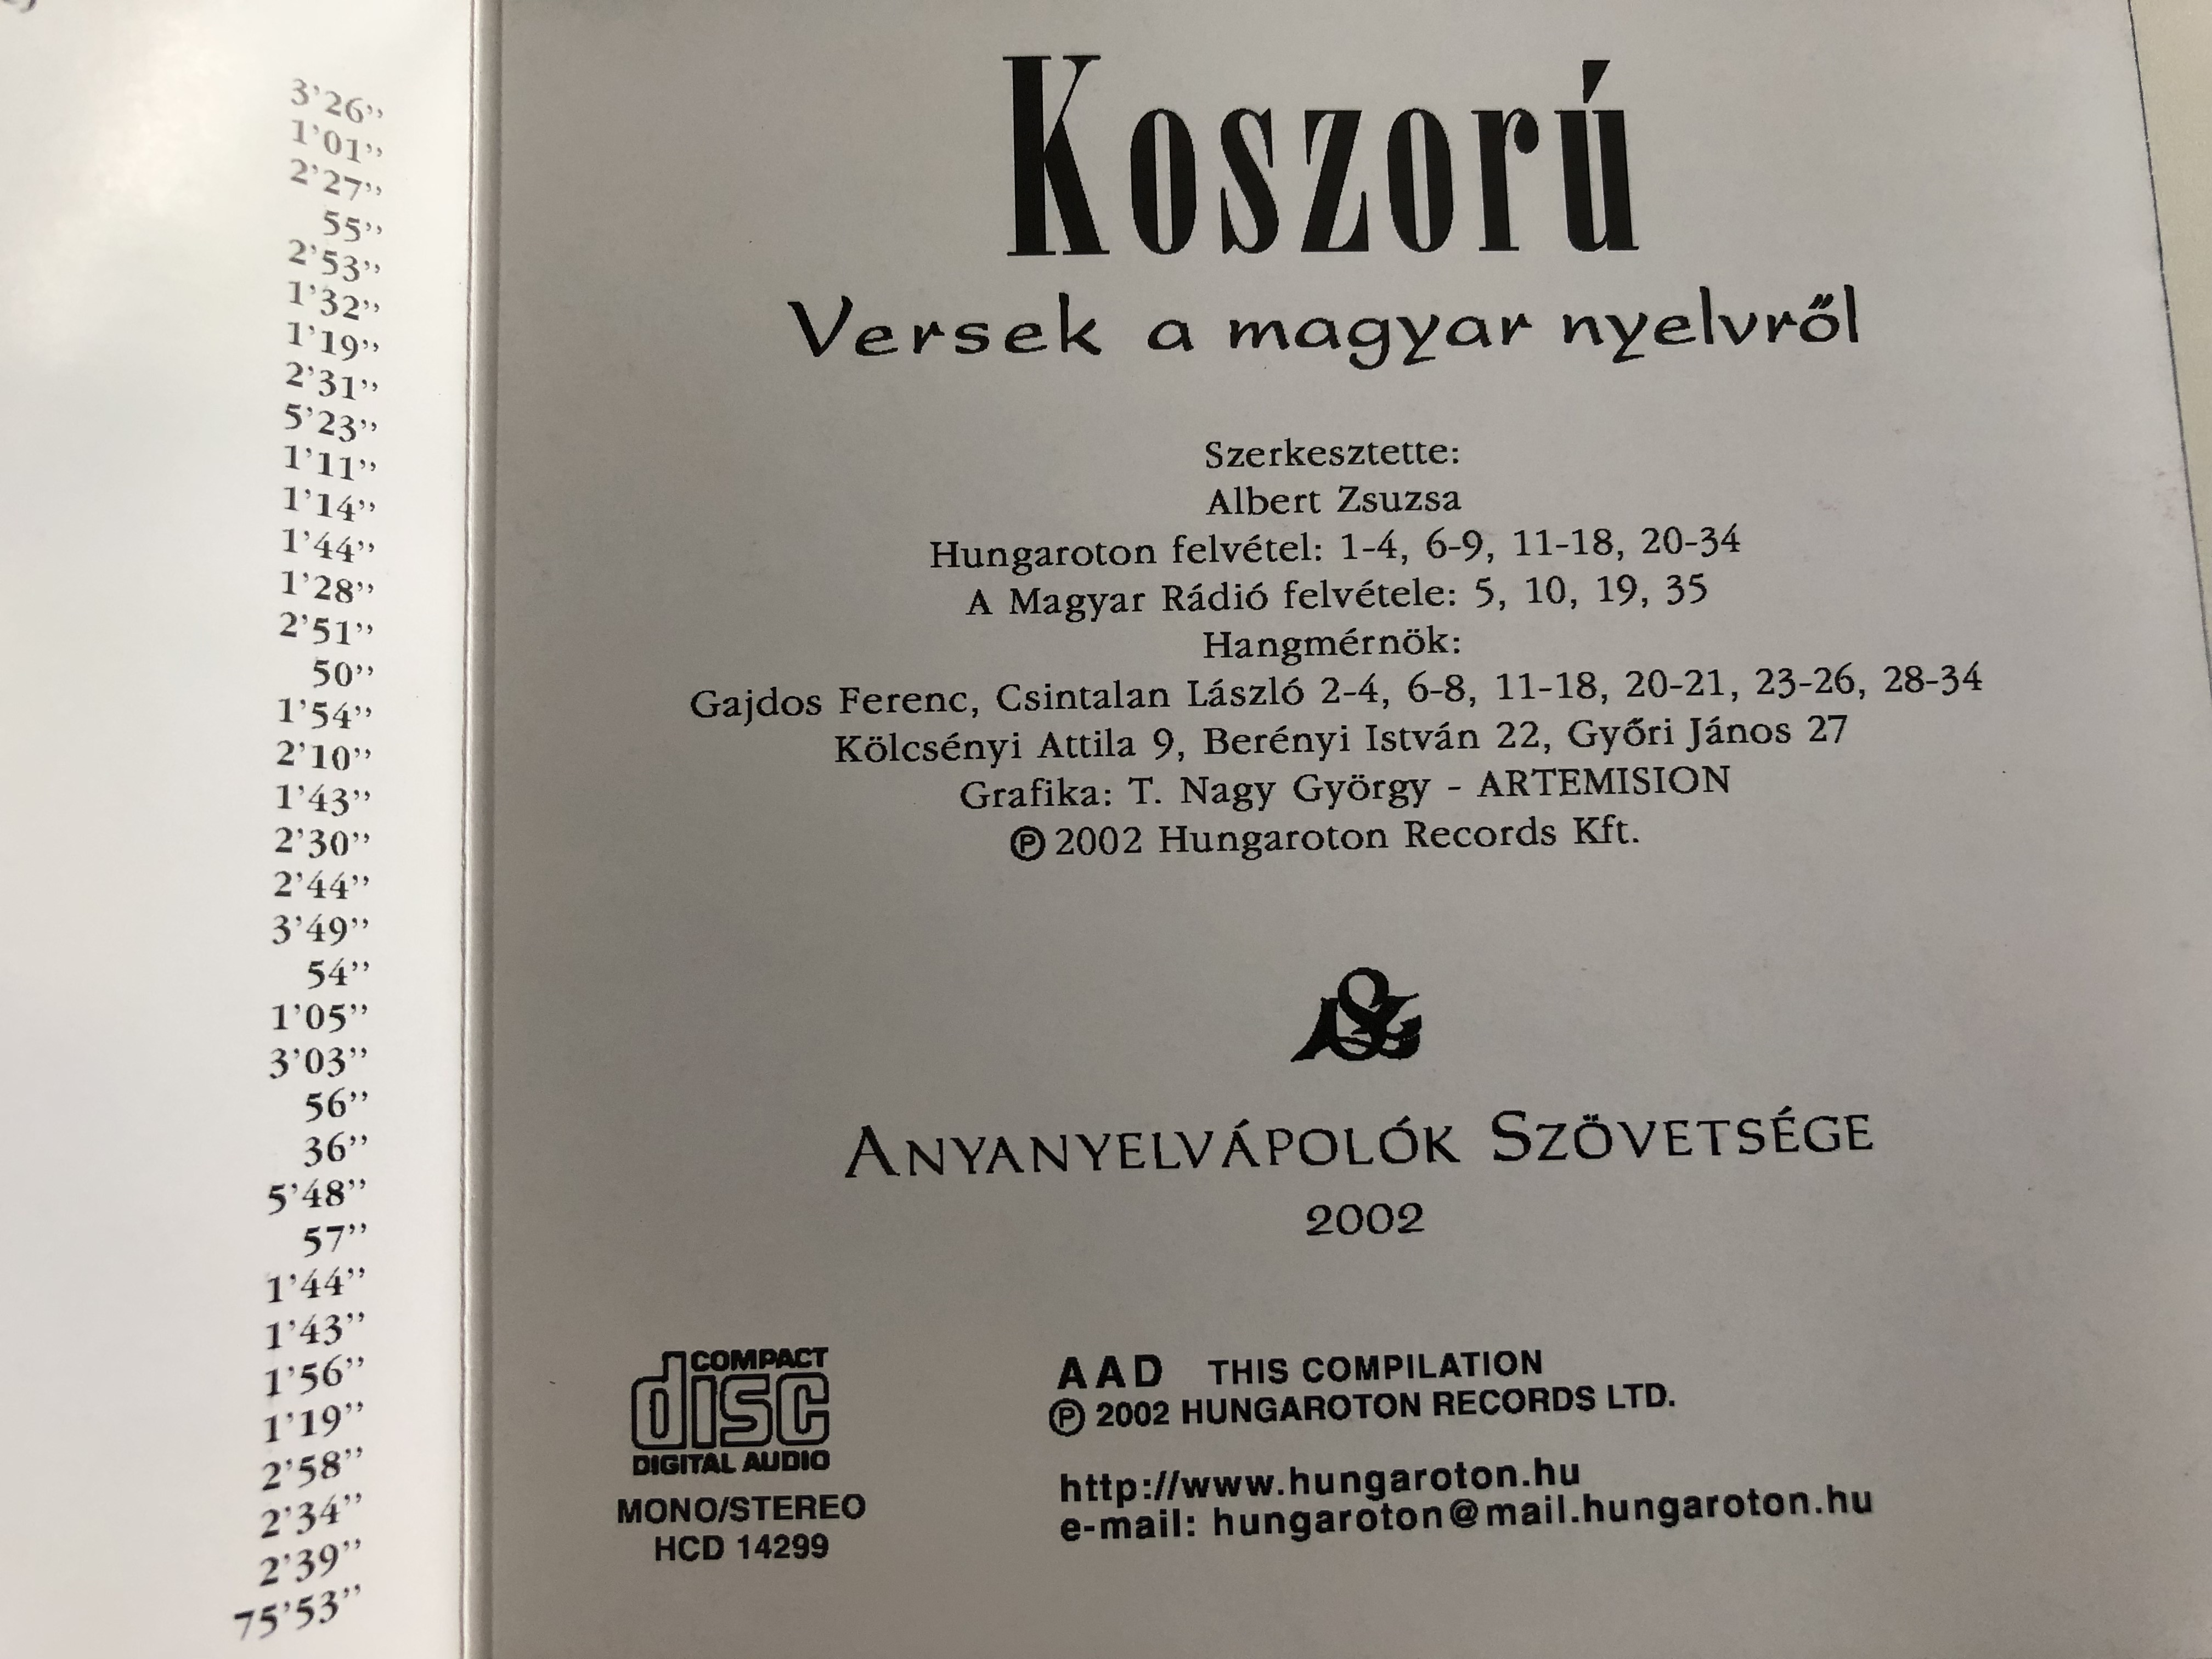 anyanyelv-pol-k-sz-vets-ge-koszor-versek-a-magyar-nyelvr-l-hungaroton-classic-audio-cd-2002-hcd-14299-3-.jpg